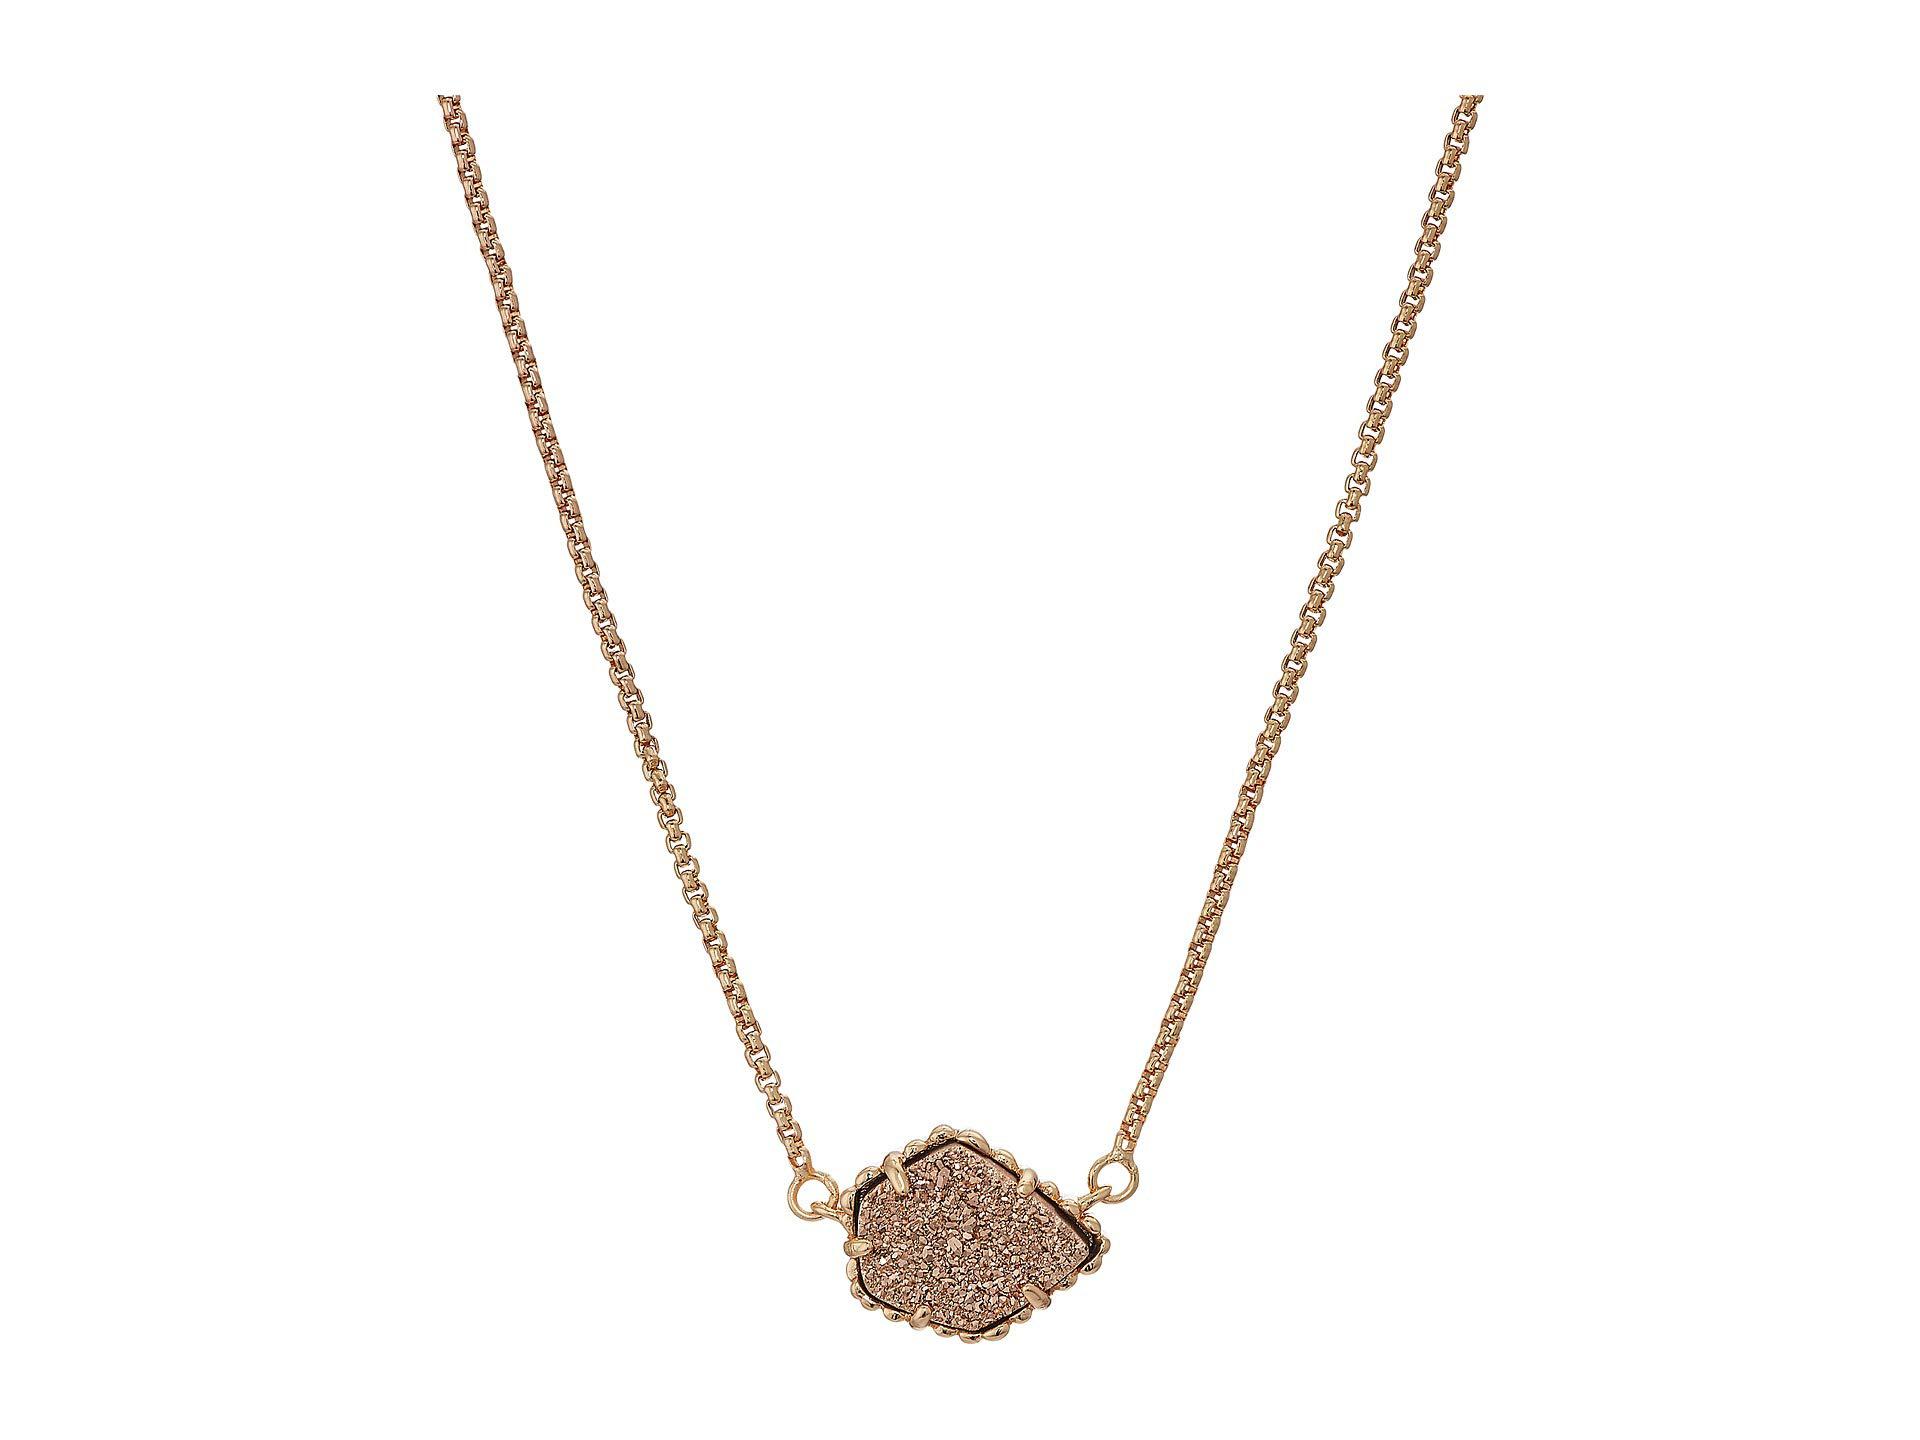 Lyst - Kendra Scott Tess Necklace (gold/multi Drusy) Necklace in Metallic